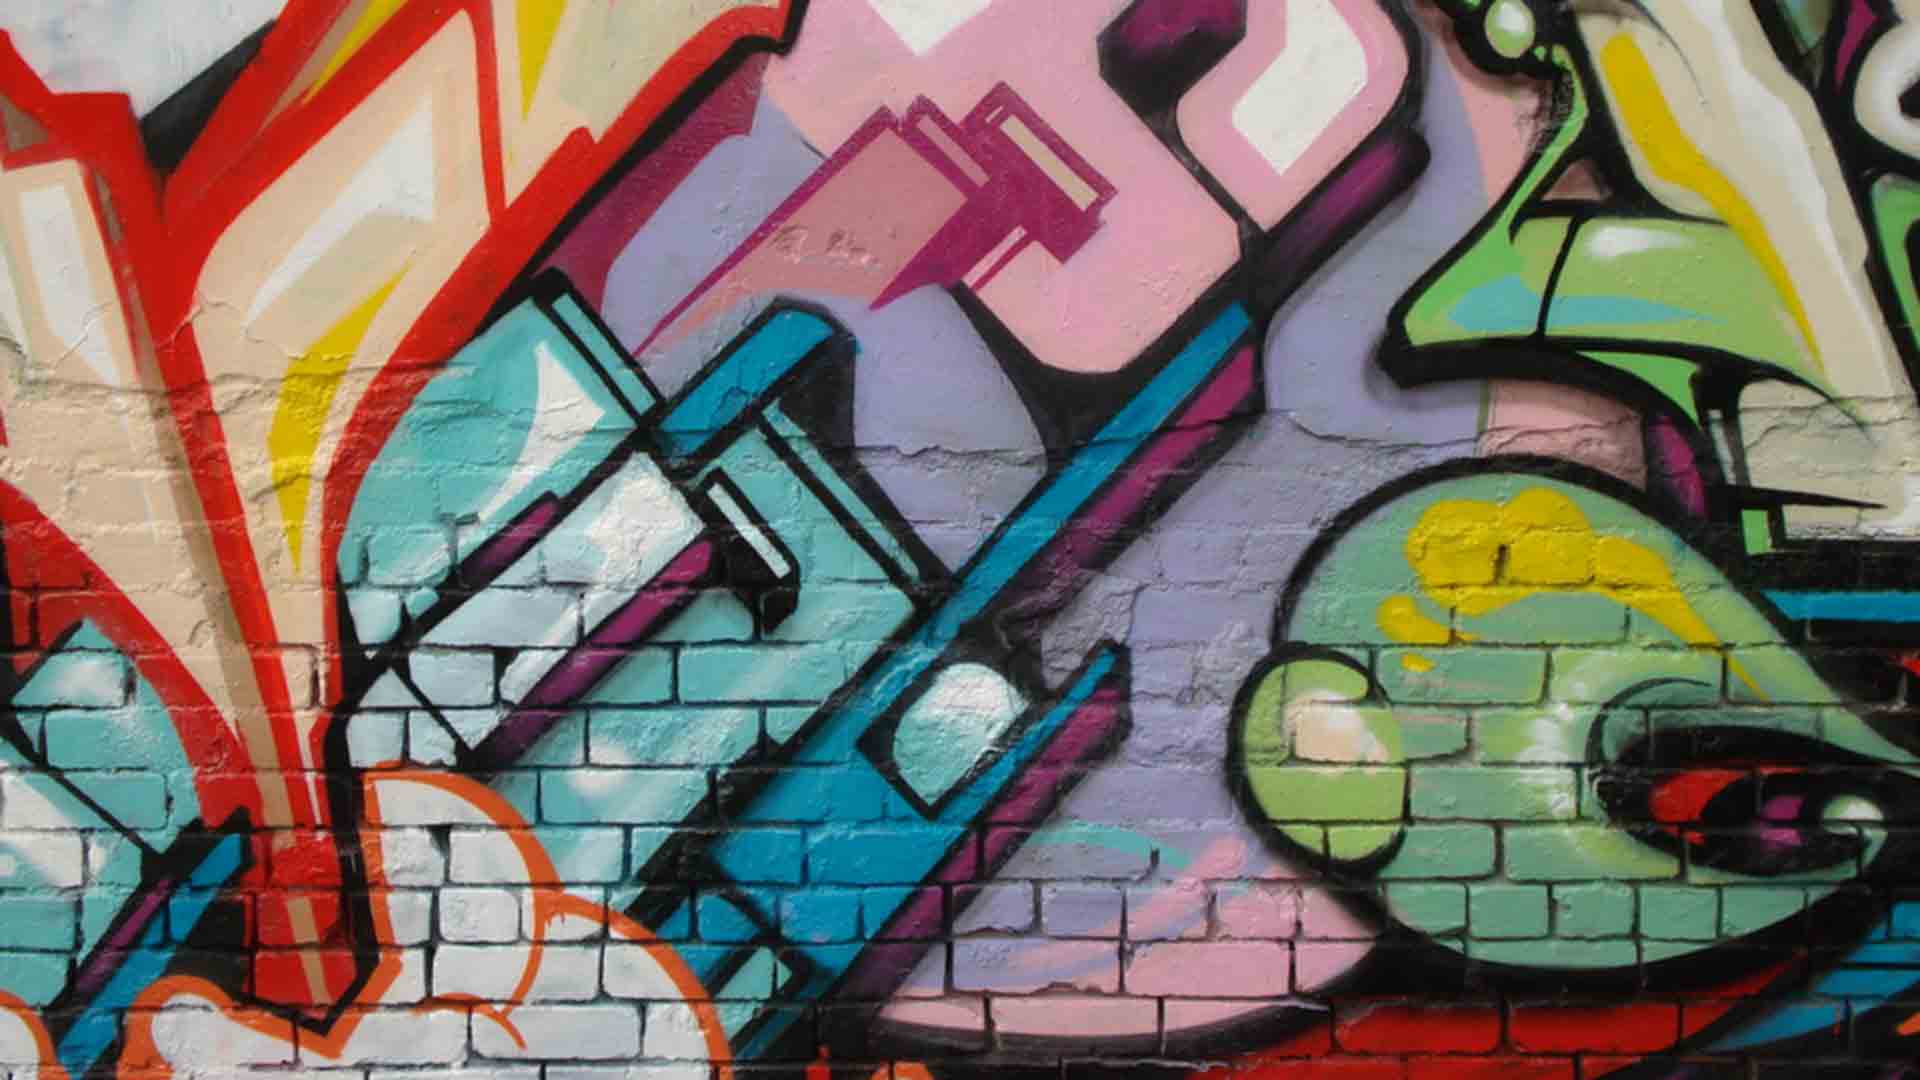 Download Wall Graffiti Wallpaper 1920x1080 Full HD Backgrounds